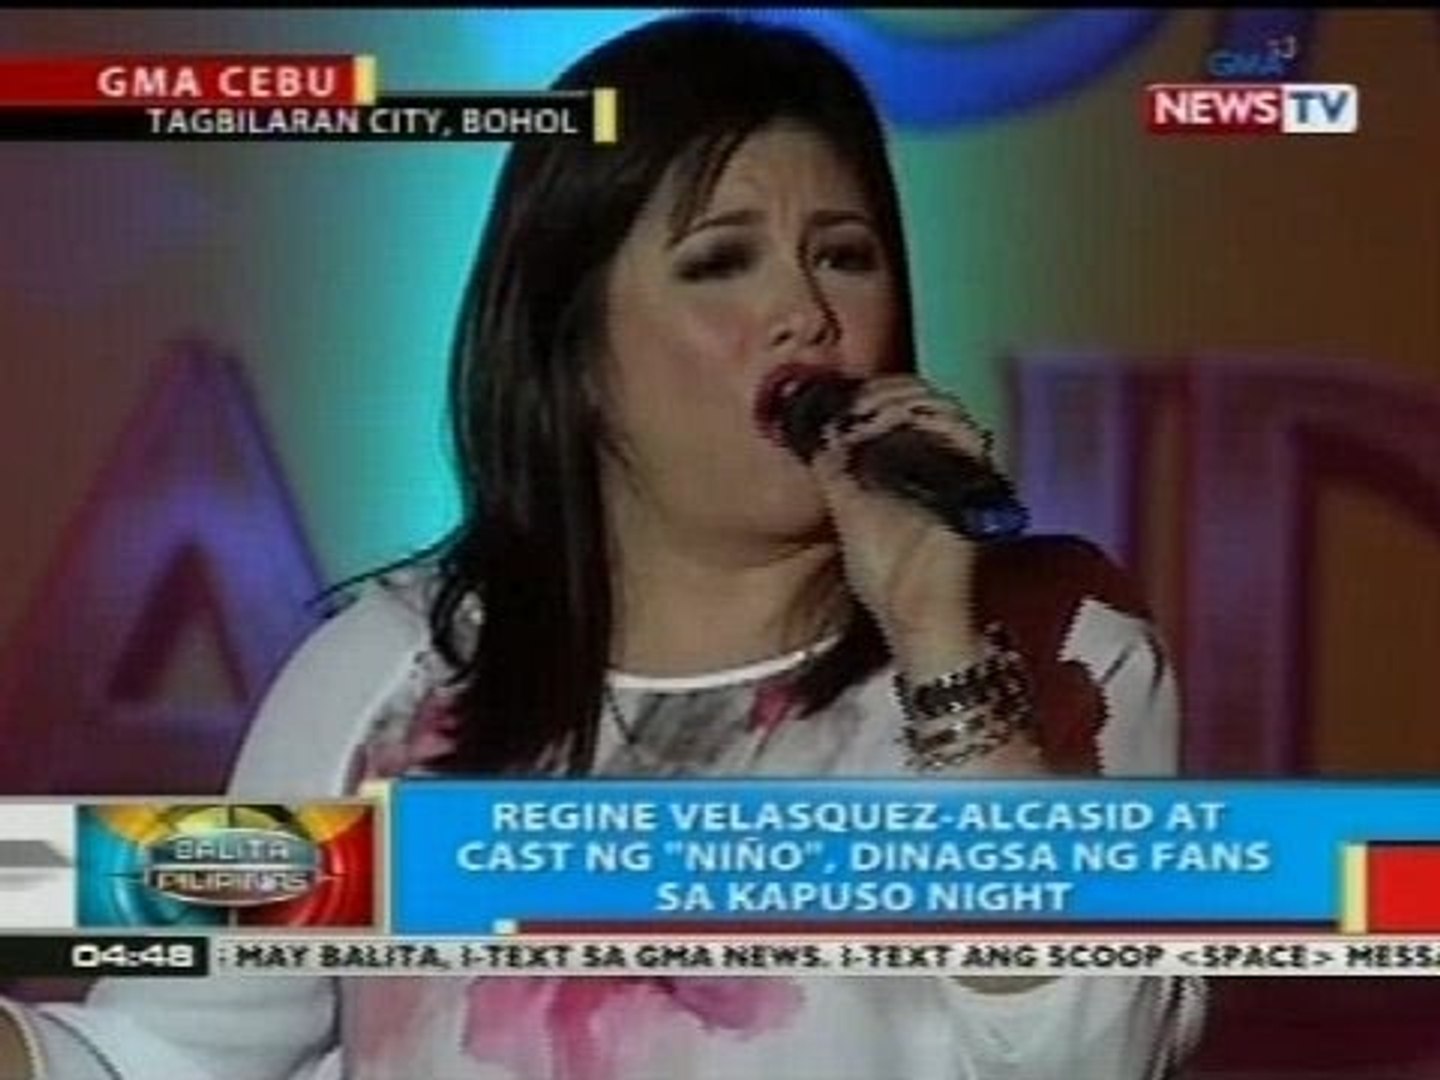 Regine Velasquez-Alcasid at cast ng